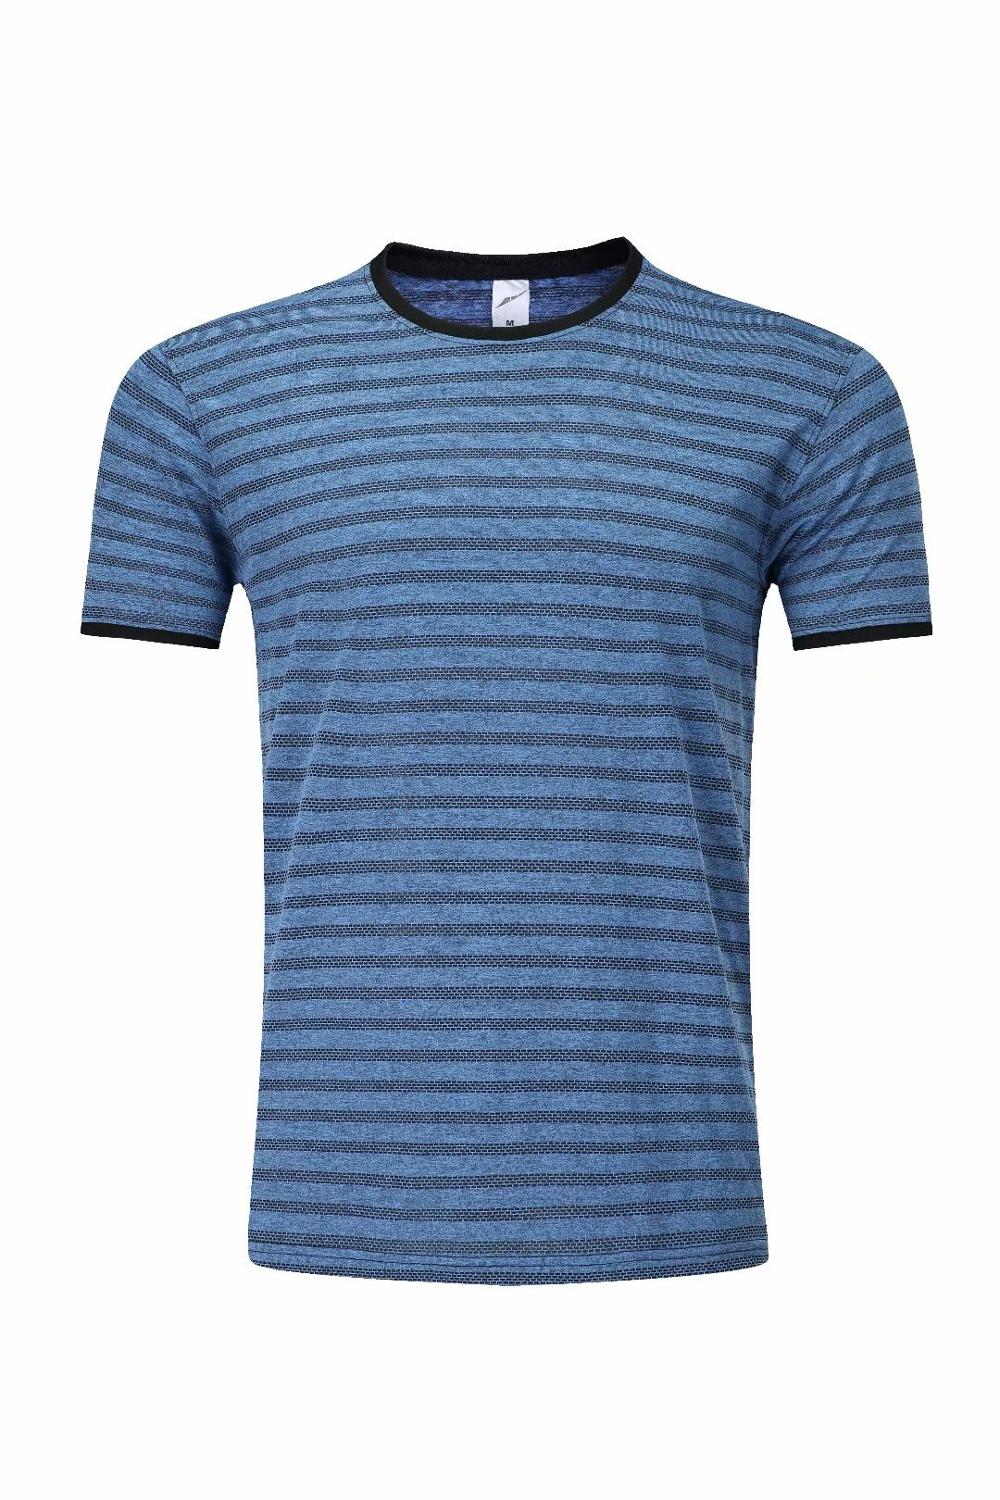 1807 lyseblå t-shirt poloshirts